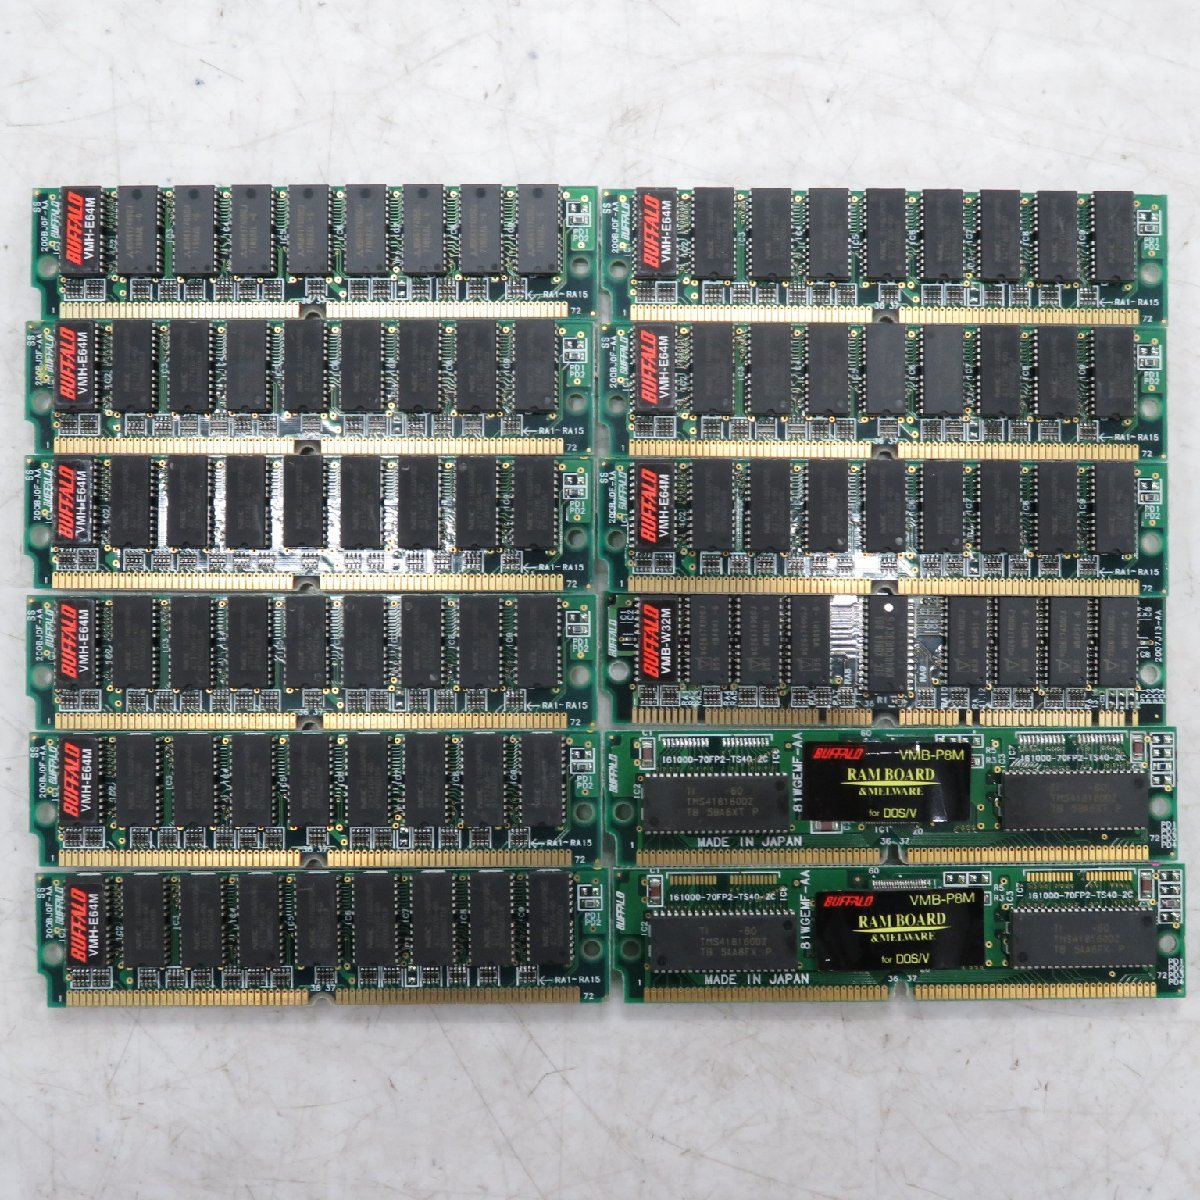 PC-98シリーズ デスク用 SIMM メモリ BUFFALO VMH-E64M 他 合計12枚